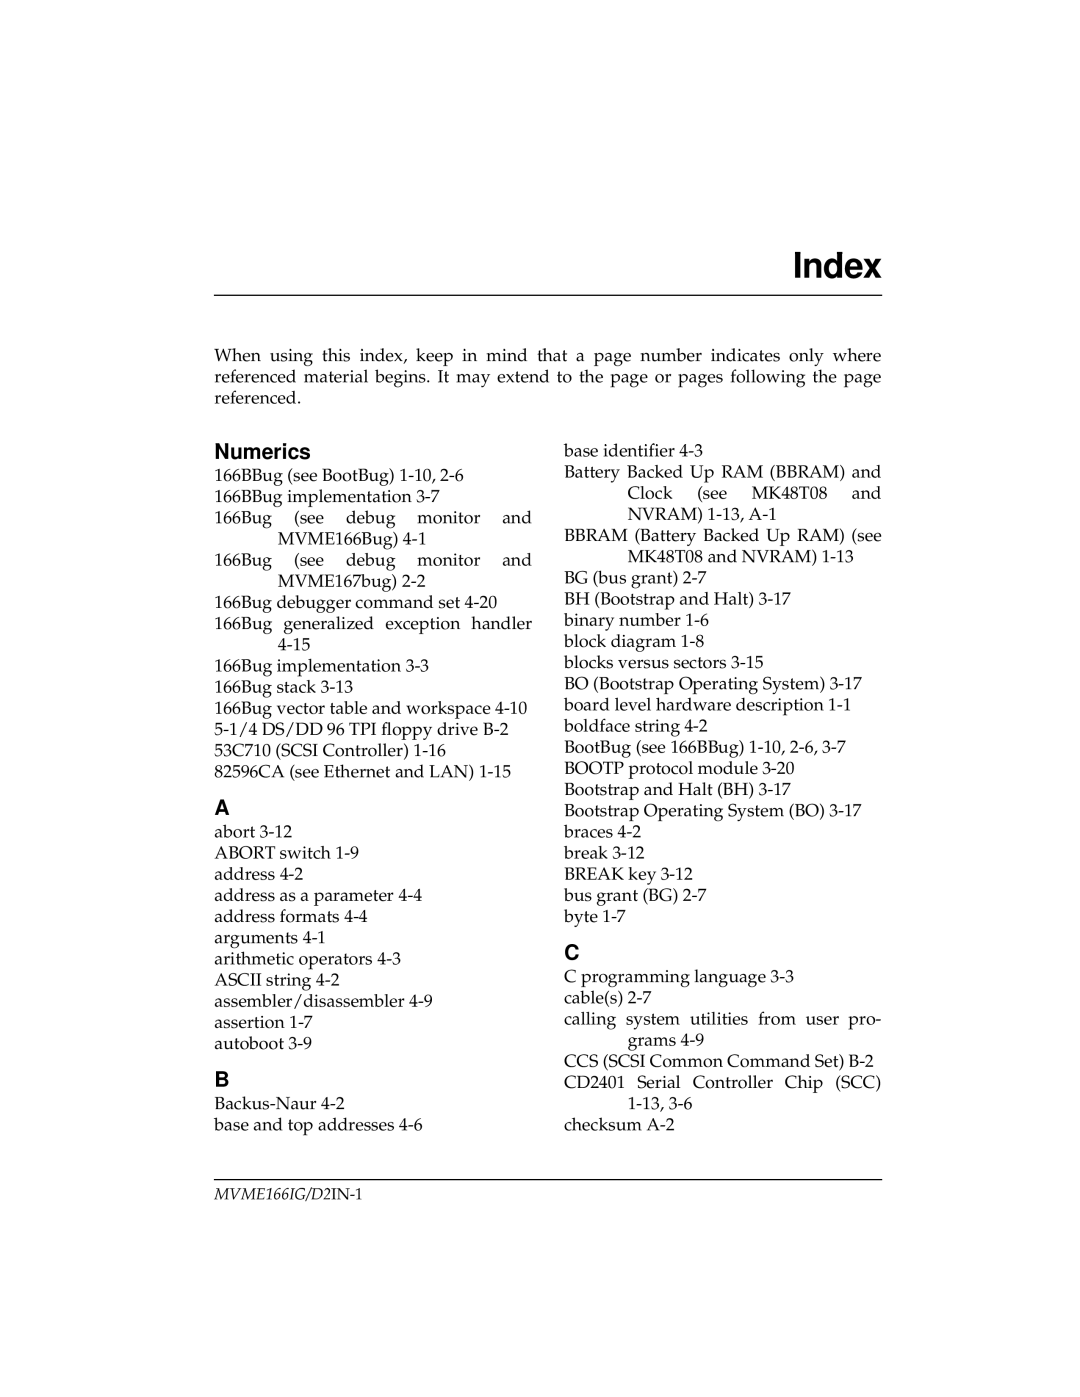 Motorola MVME166IG/D2, MVME166D2 manual Index, Numerics 